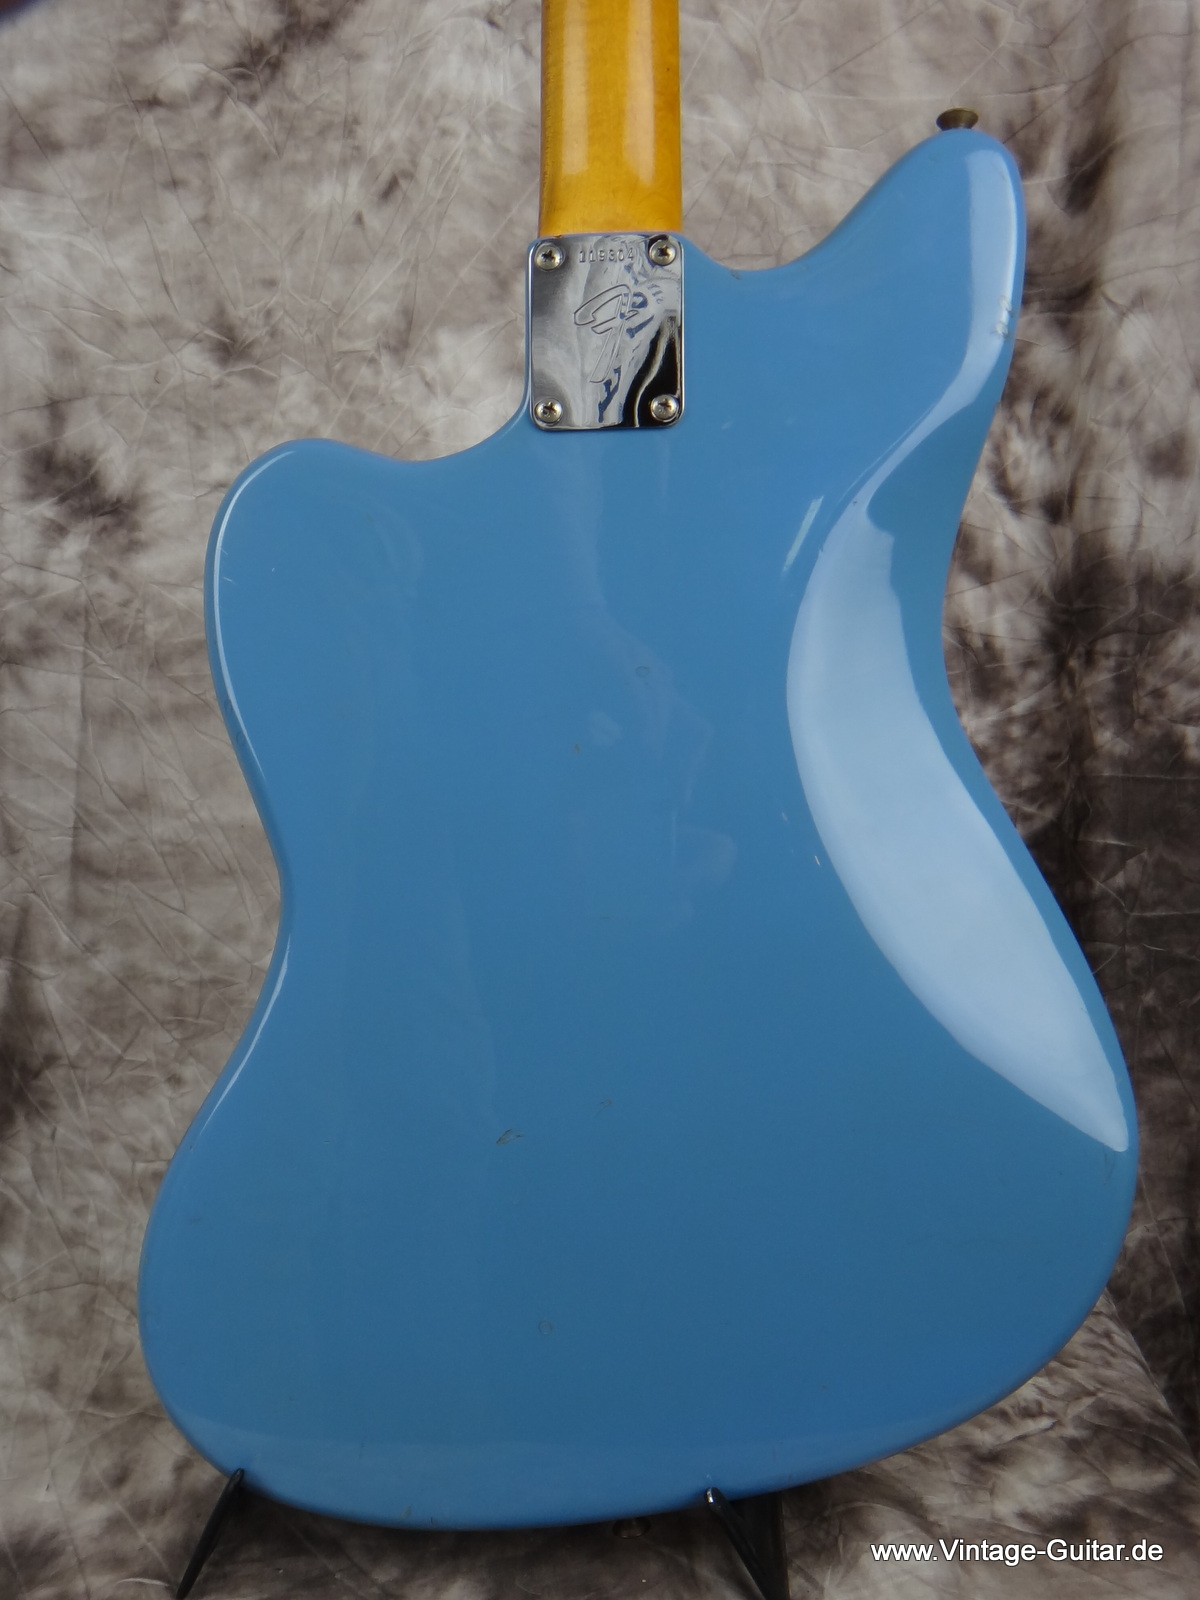 Fender_Jazzmaster-1966_blue-refinished-004.JPG